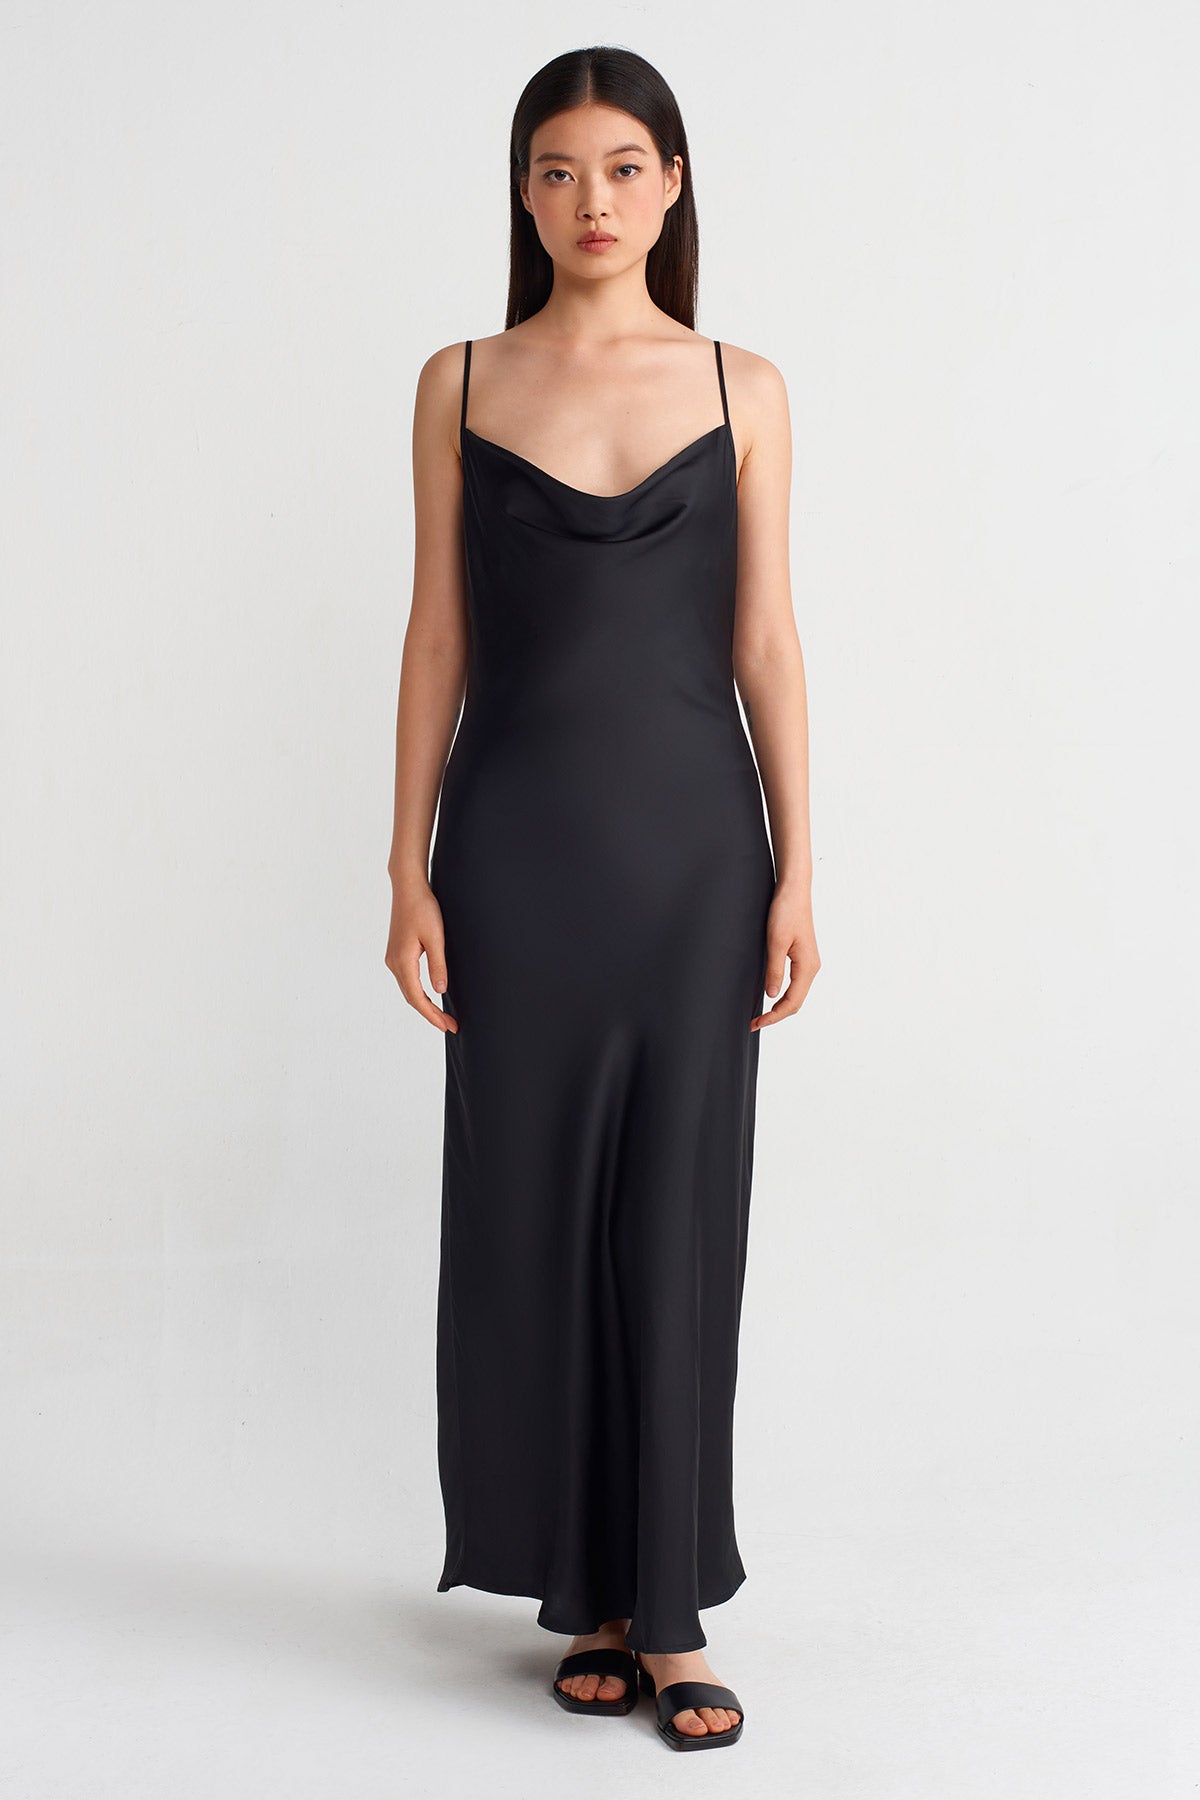 Black Thin Strapped Elegant Long Dress-Y244014127